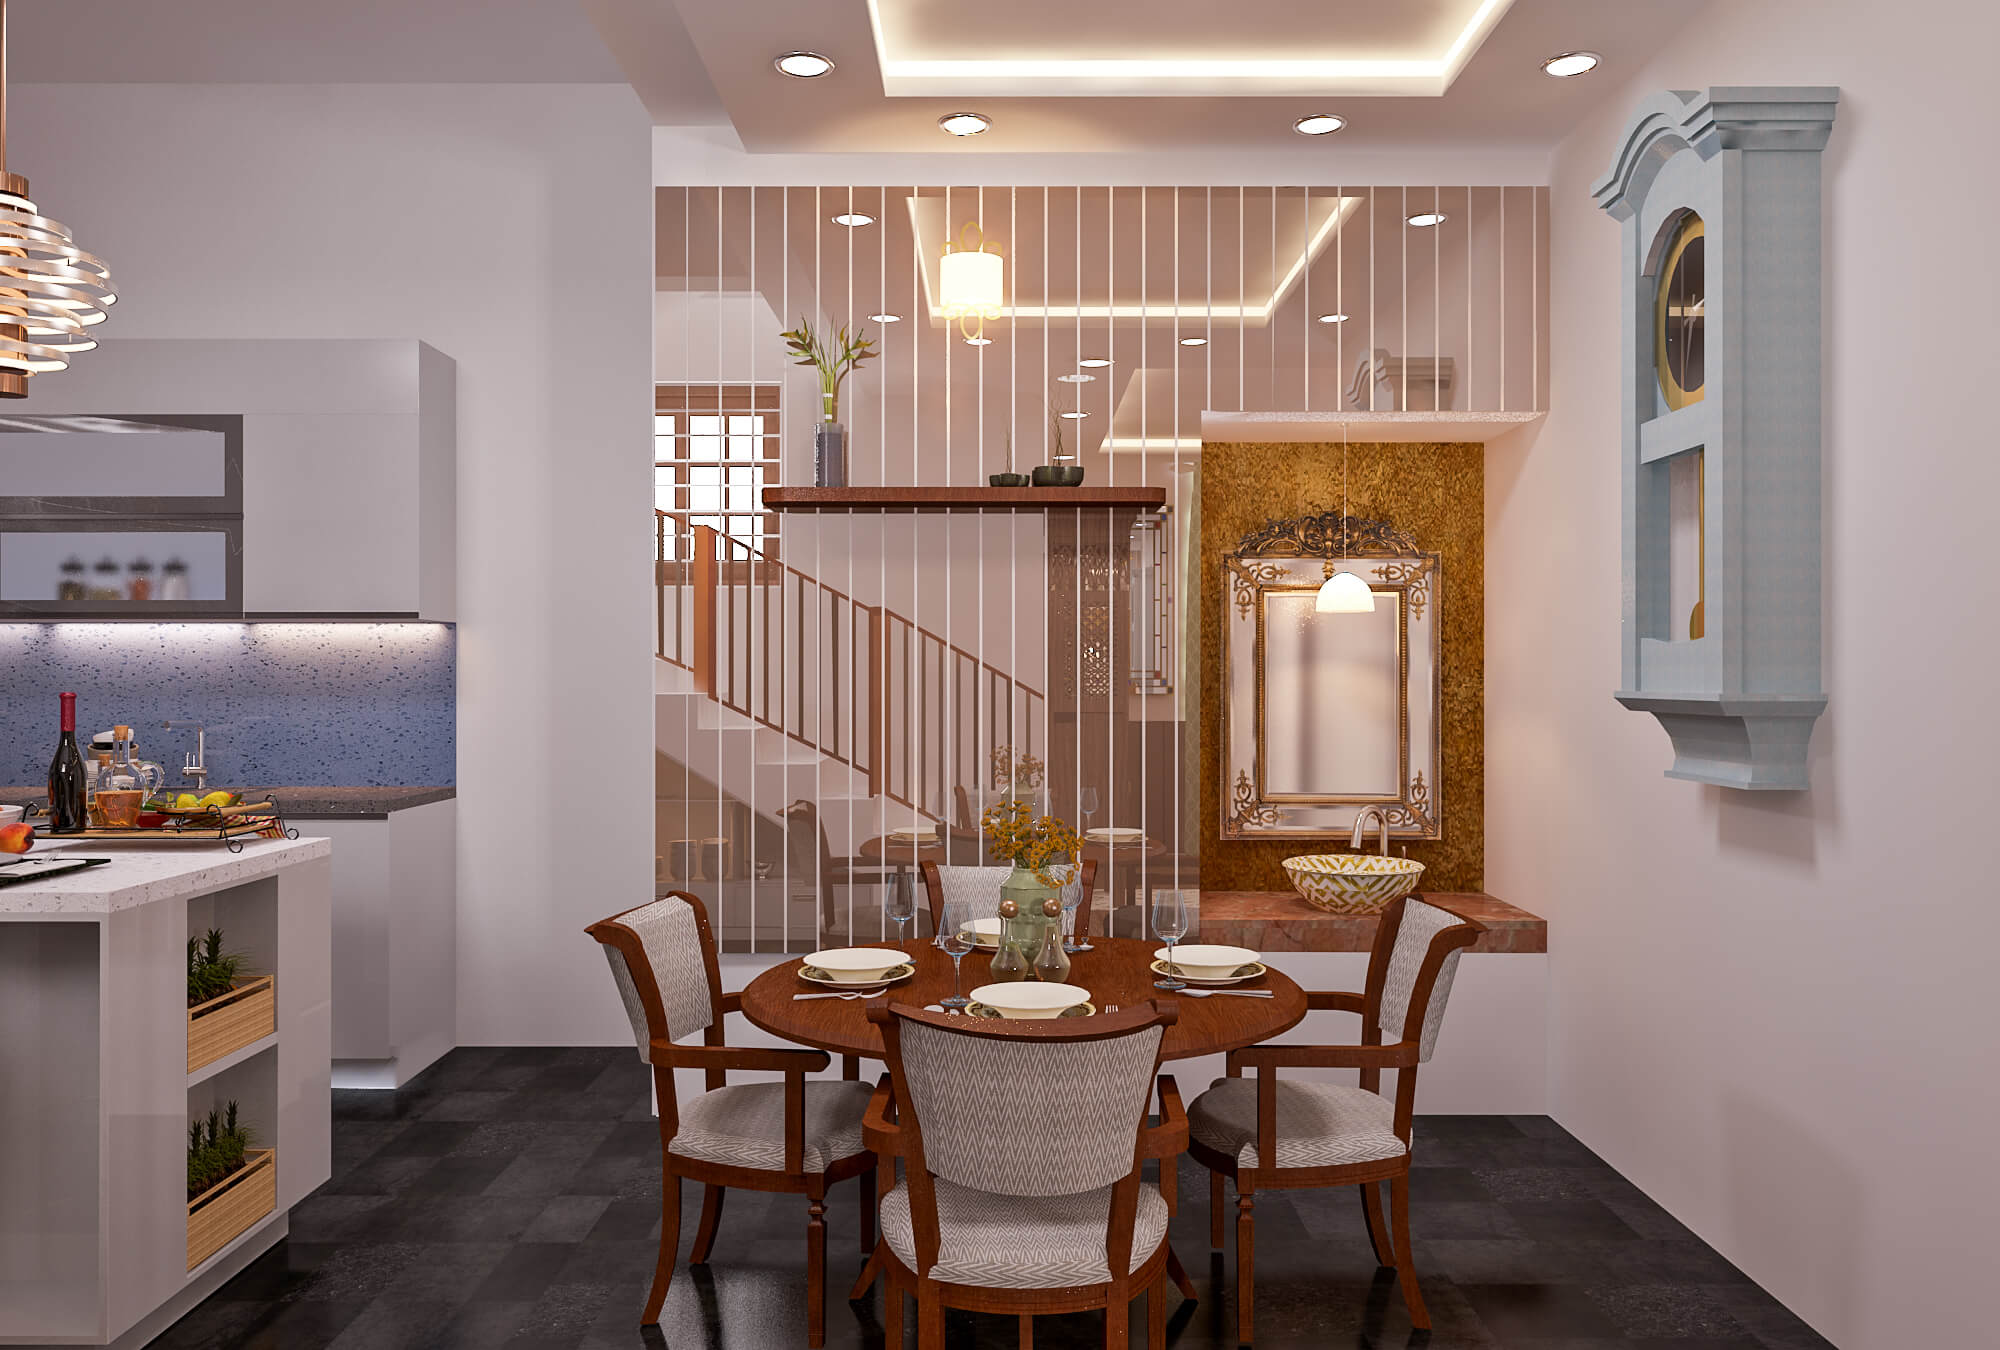 Modern Villa Interior Design Ideas